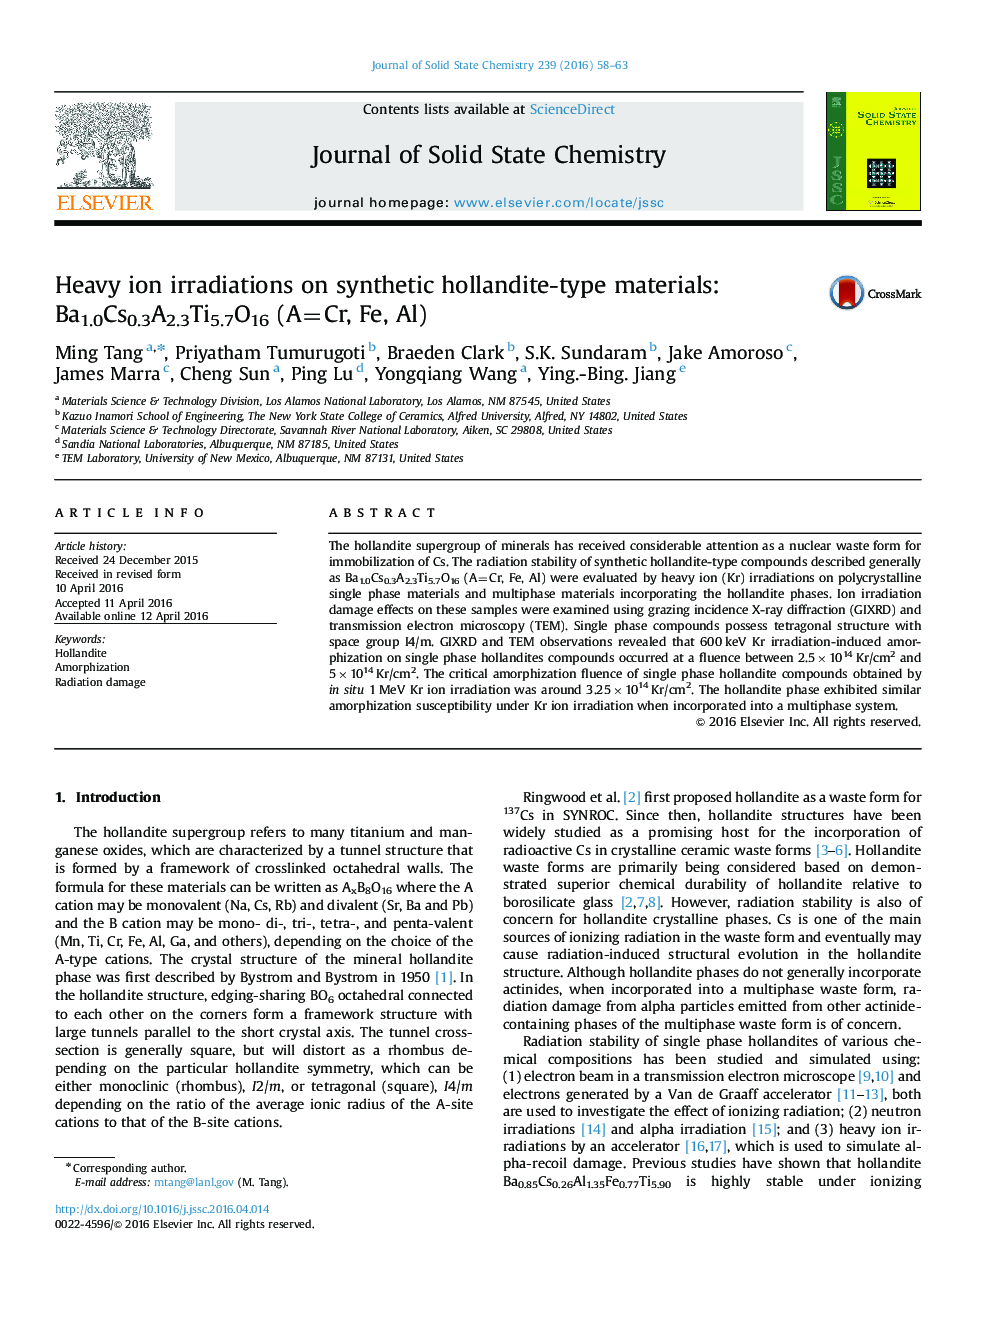 Heavy ion irradiations on synthetic hollandite-type materials: Ba1.0Cs0.3A2.3Ti5.7O16 (A=Cr, Fe, Al)